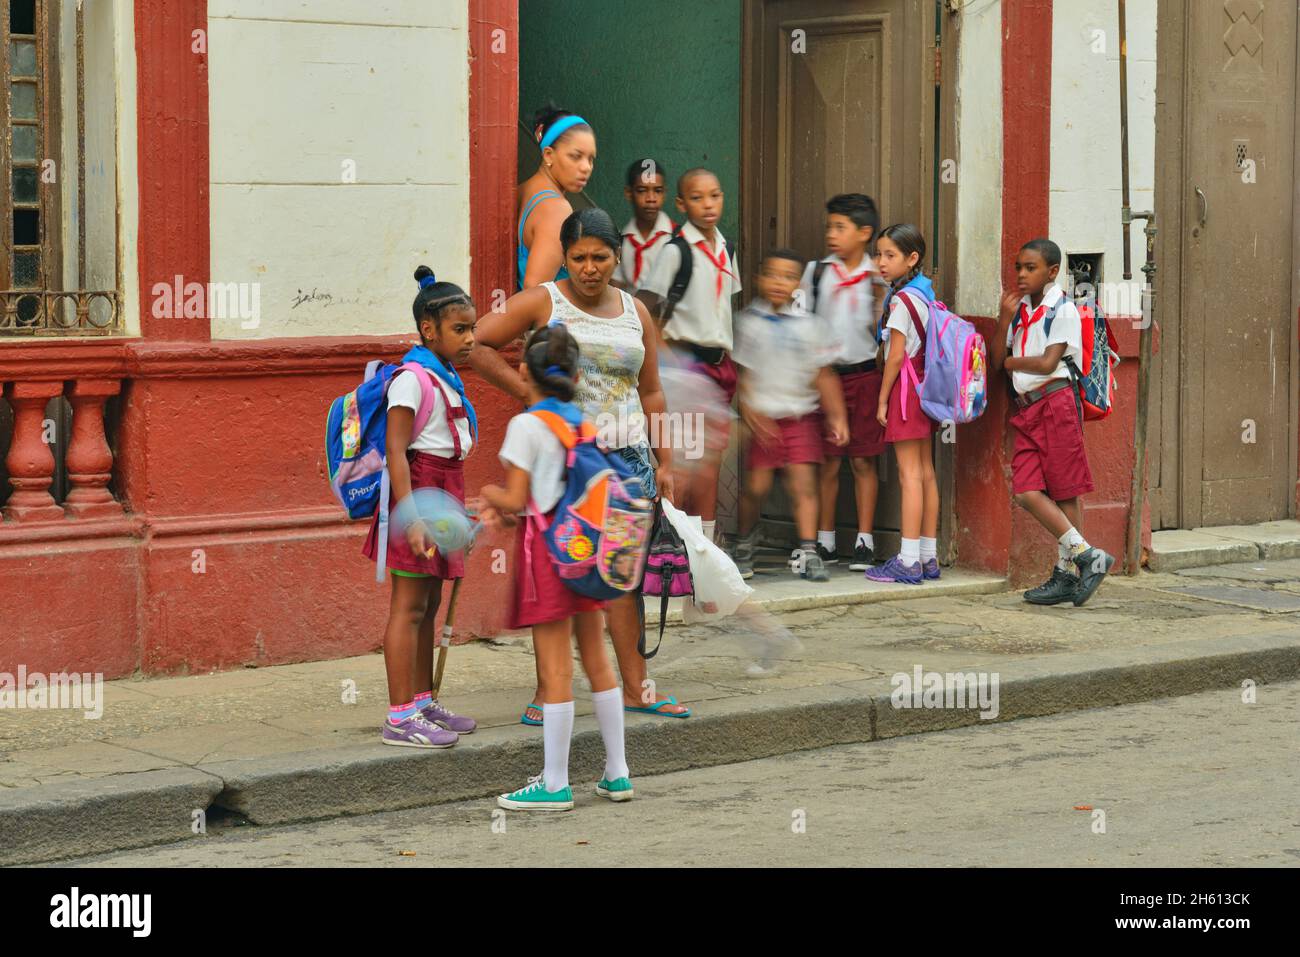 Straßenszene im Zentrum von Havanna. Schulkinder kommen an einer Stadtschule an, La Habana (Havanna), Habana, Kuba Stockfoto